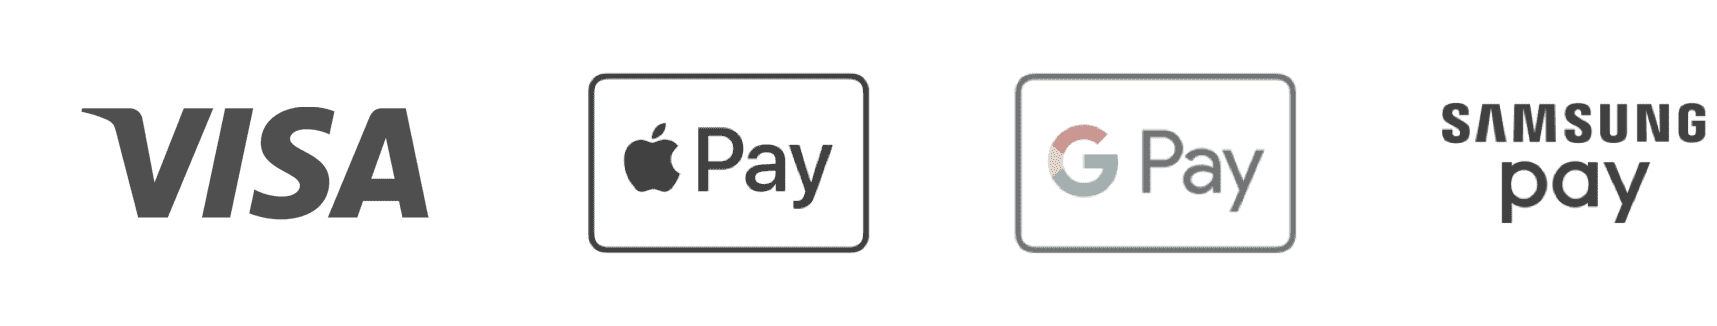 Visa, Apple Pay, Google Pay, Samsung Pay logos